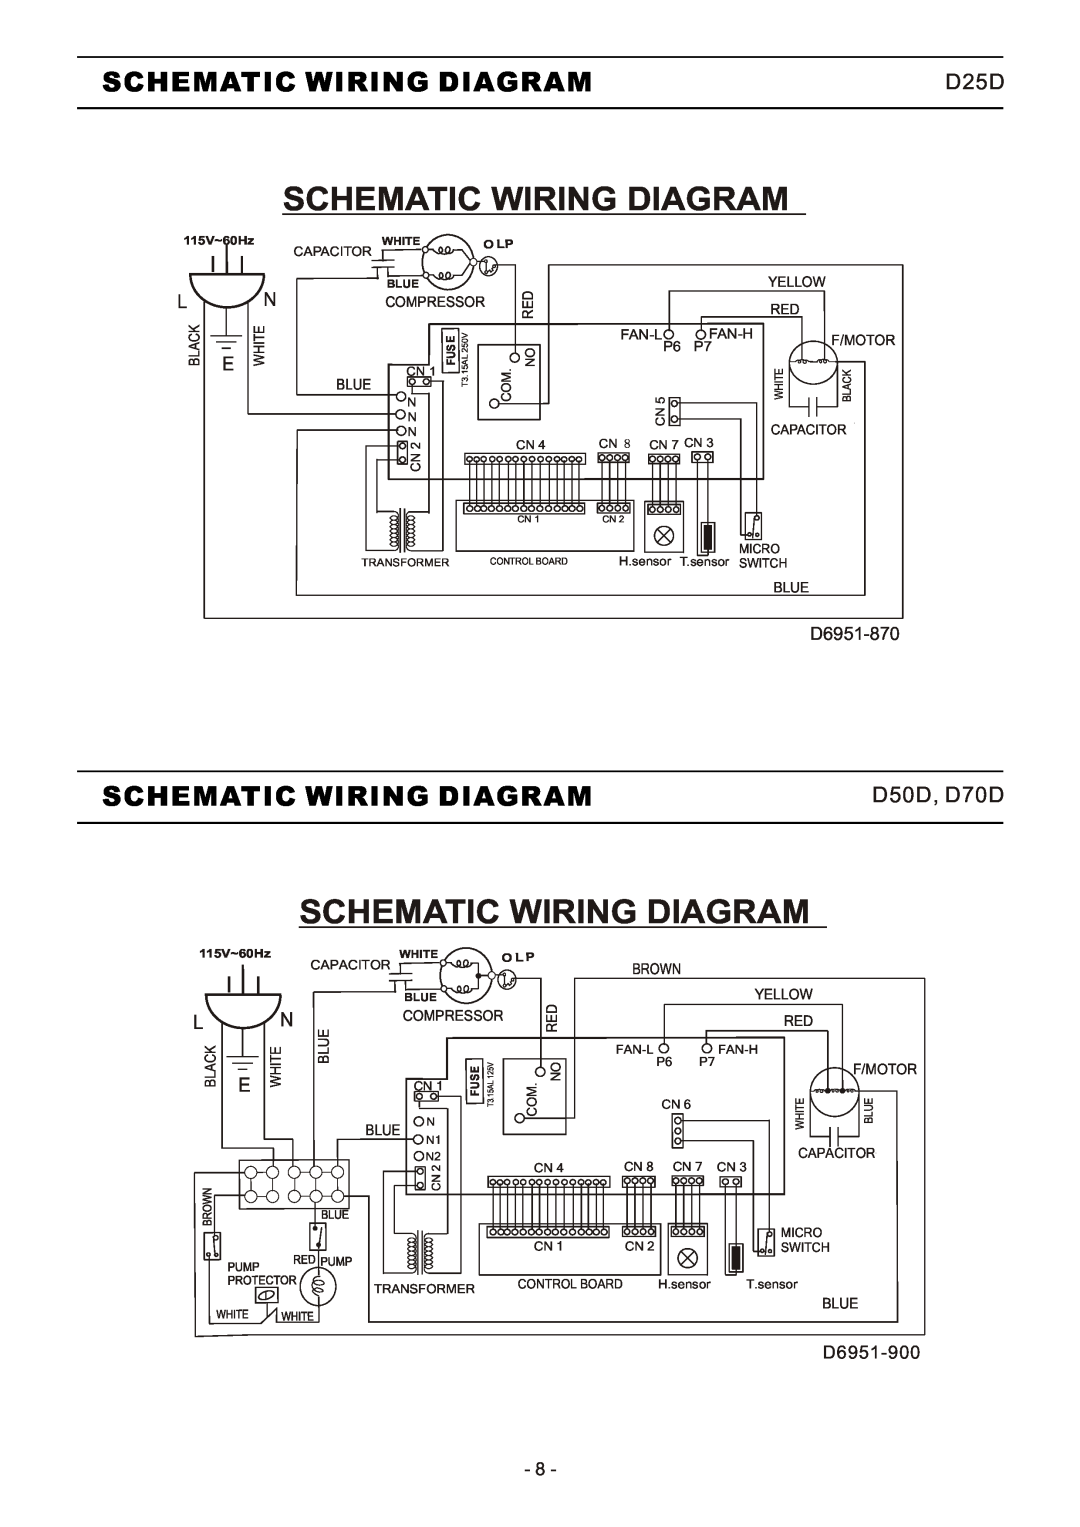 Friedrich Dehumidifier Schematic Wiring Diagram, D25D, D50D, D70D, Brown, Yellow, Compressor, Blue, Fan-L, Fan-H, Micro 